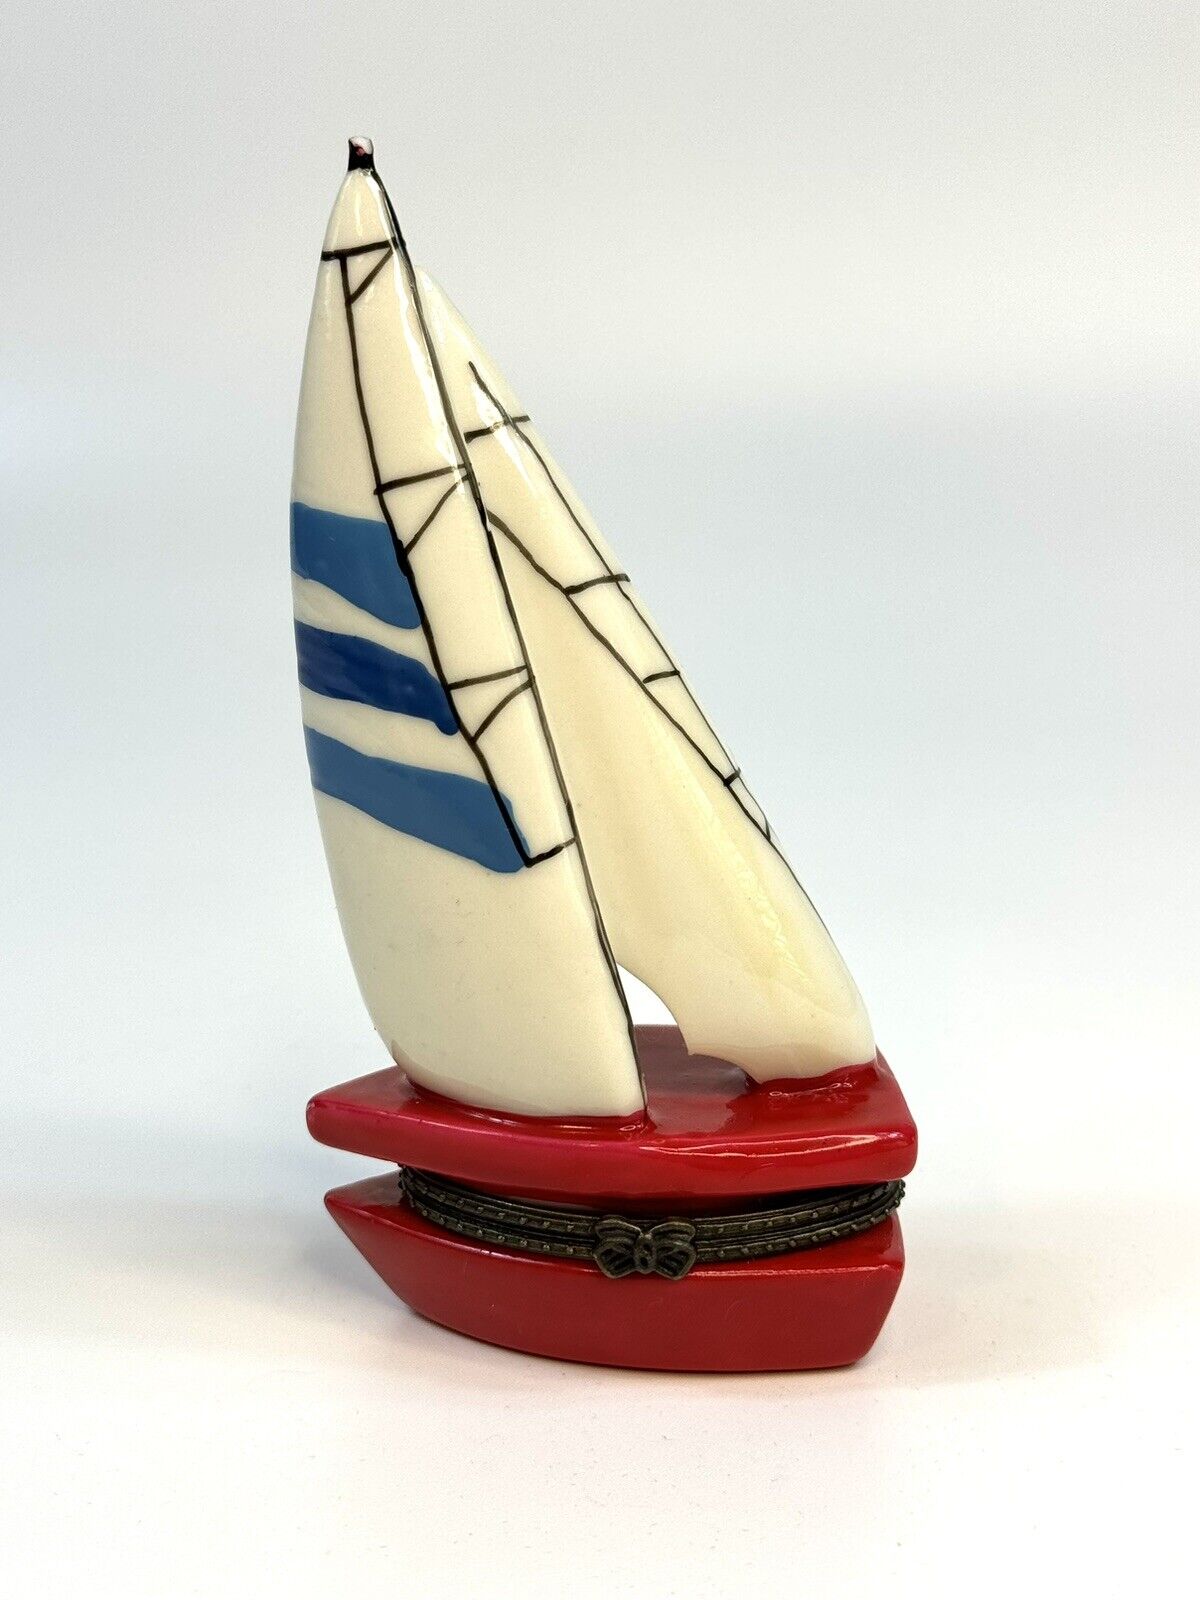 Porcelain Hinged Trinket Box Sailboat Sailing